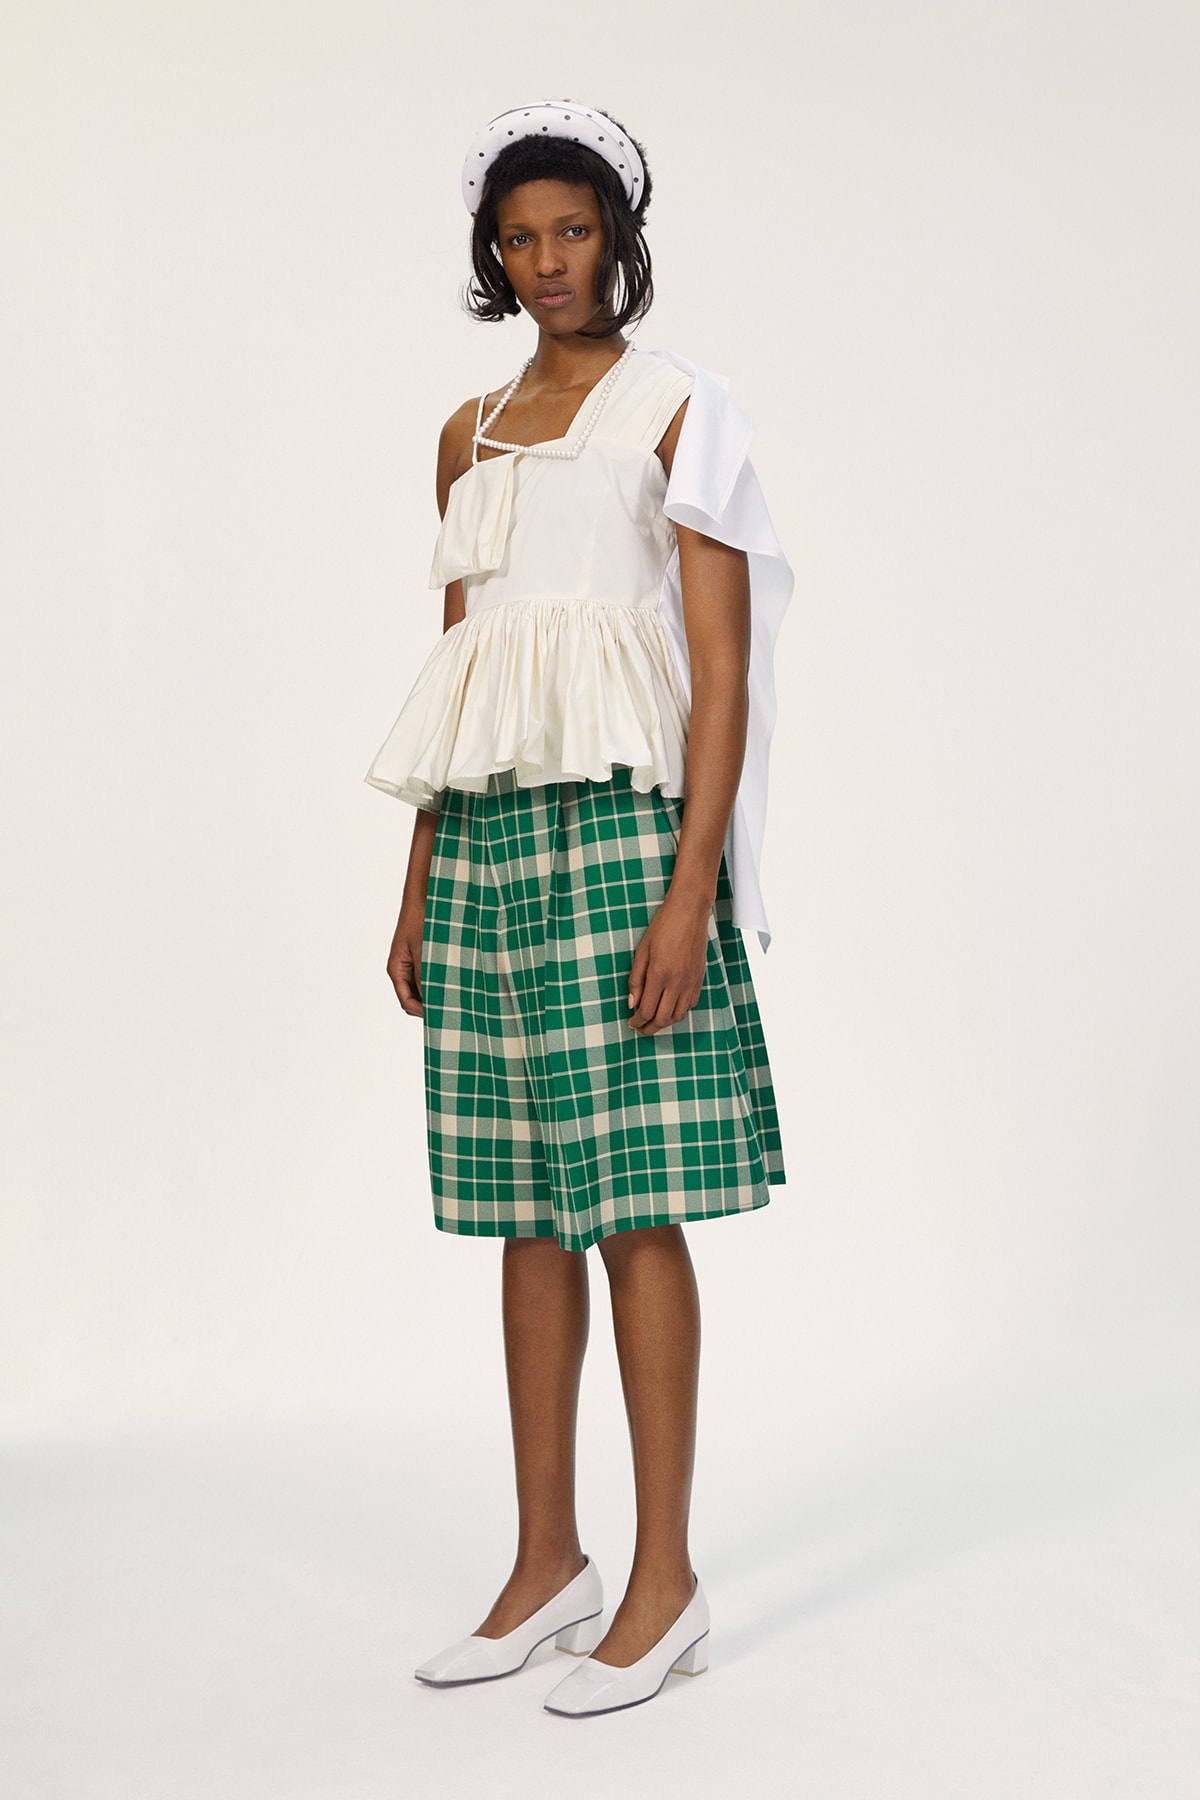 MM6 Maison Margiela Spring/Summer 2020 Collection Lookbook Plaid Shorts Ruffle Top